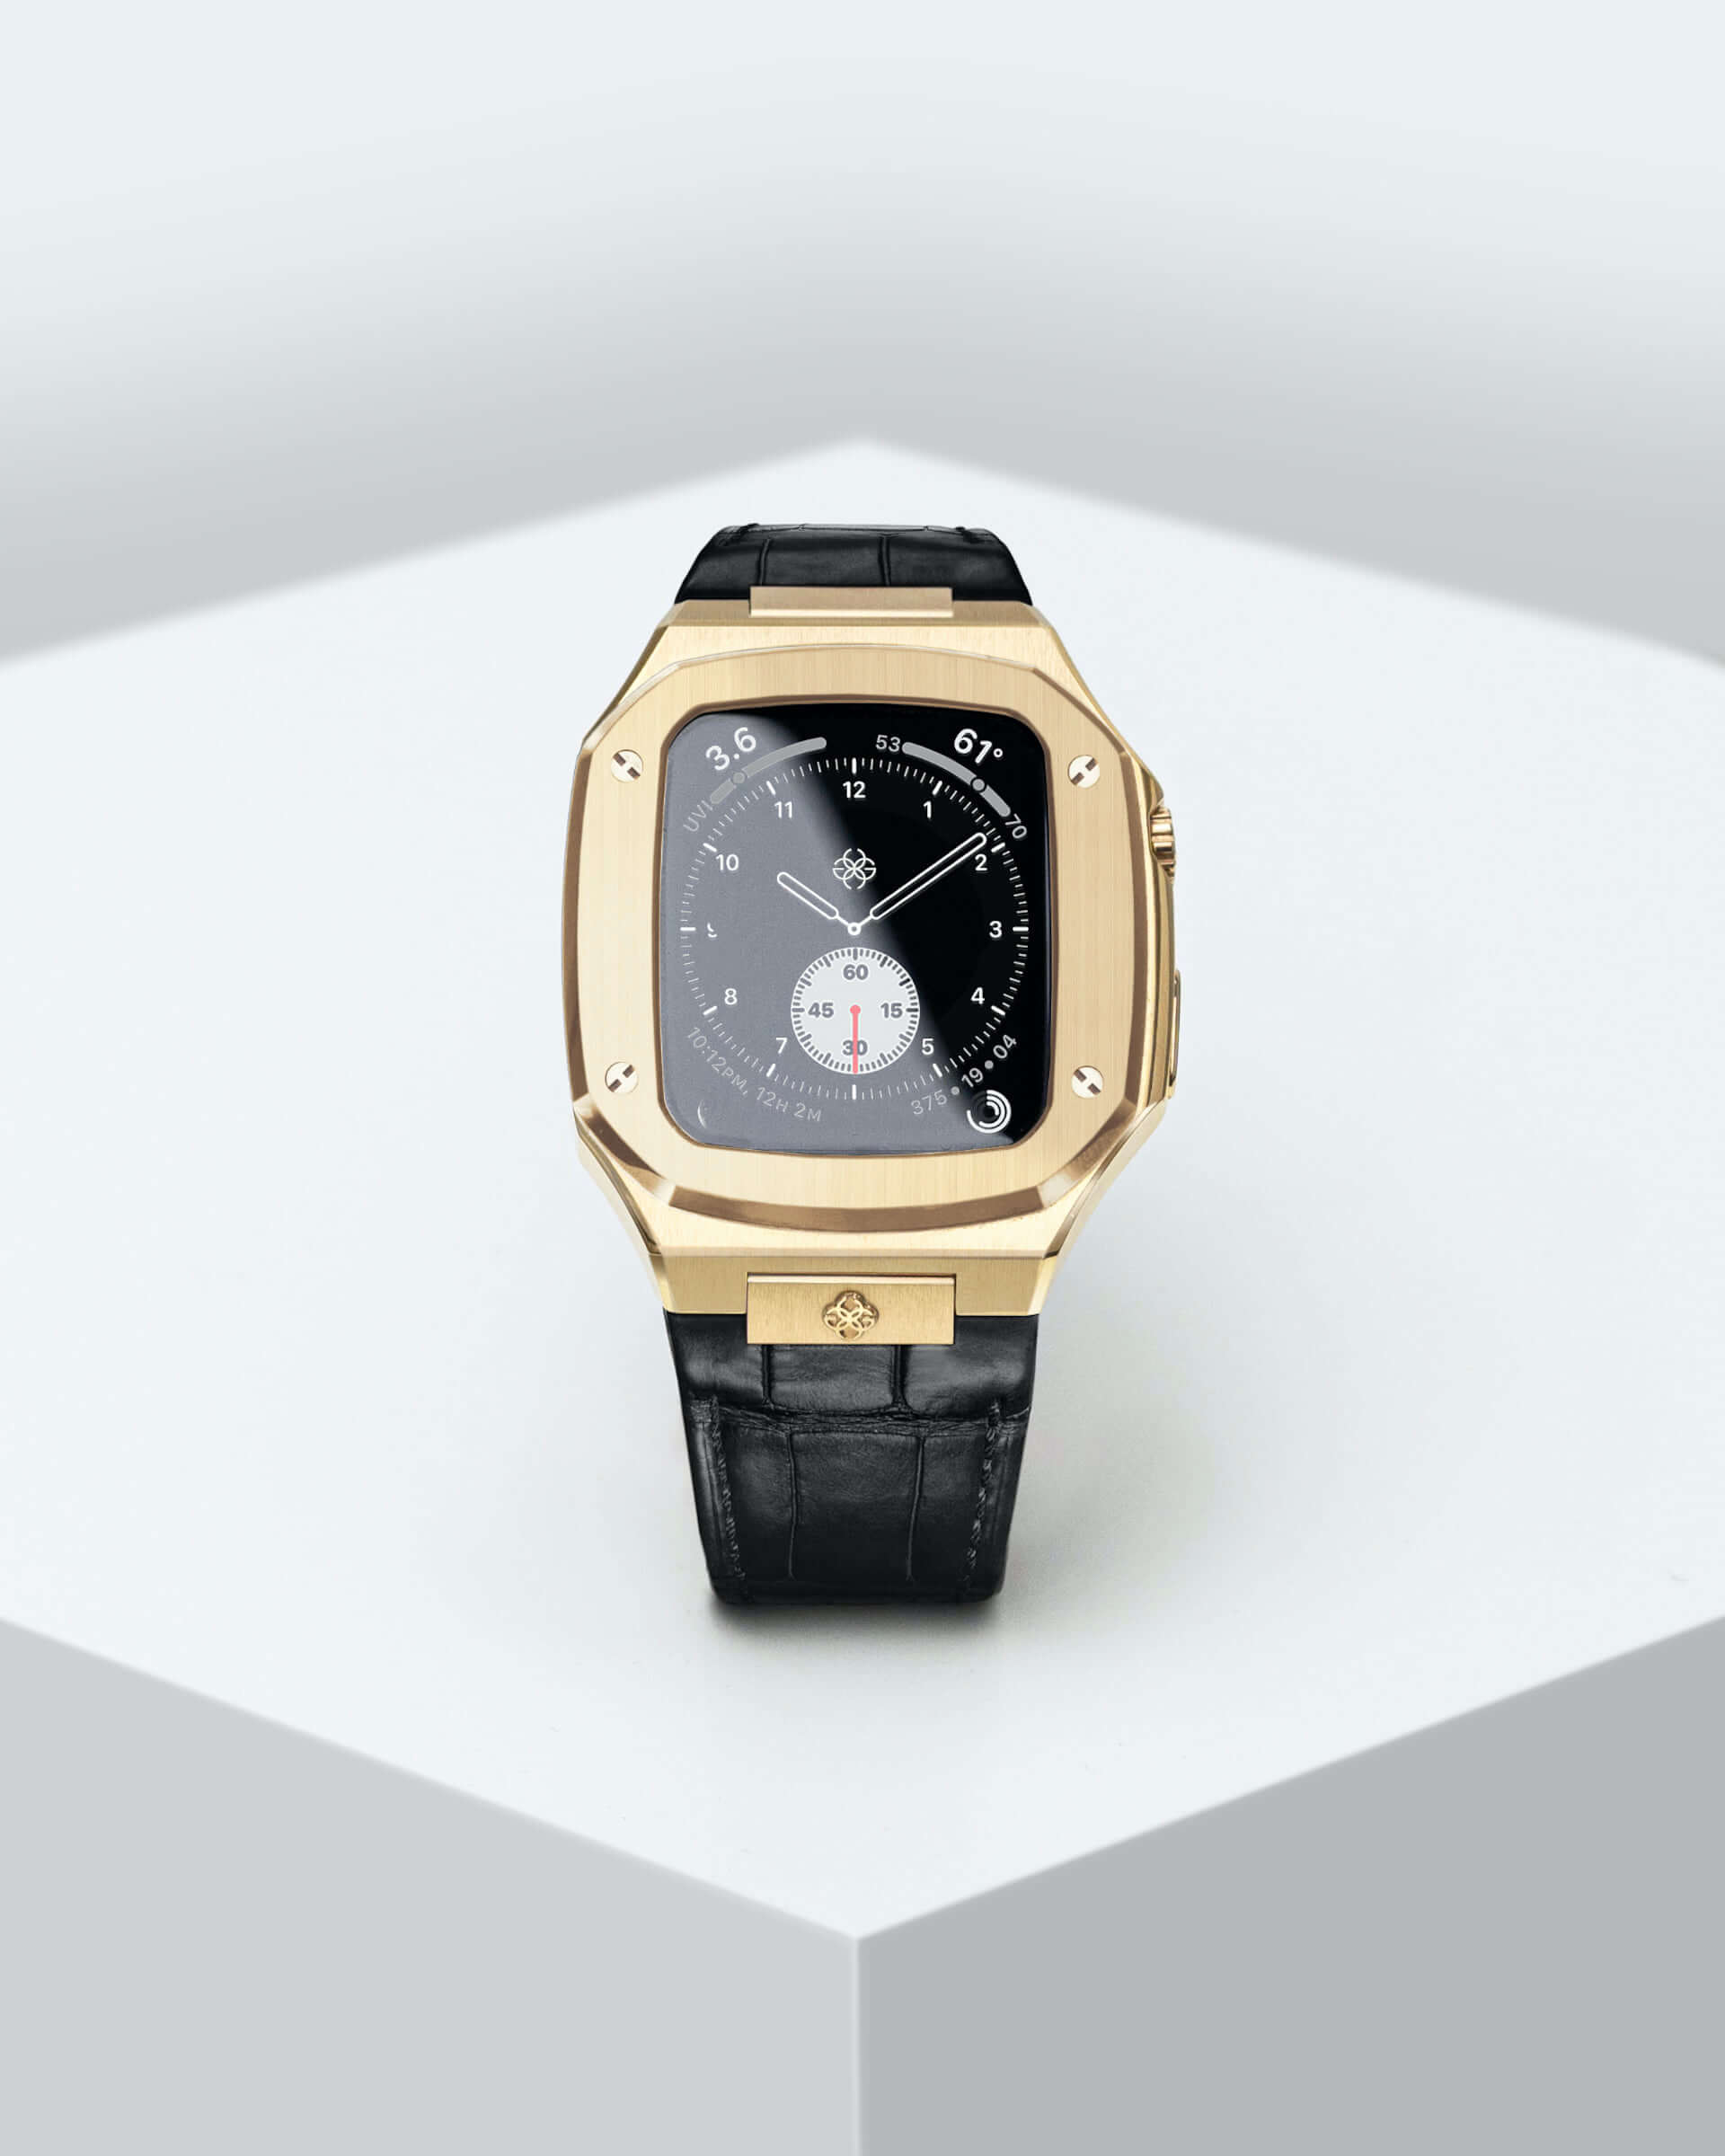 「GOLDEN CONCEPT」の高級Apple Watchケースにレザーストラップモデルが登場！世界999個限定で予約受付スタート tech201116_golden-concept_7-1920x2400